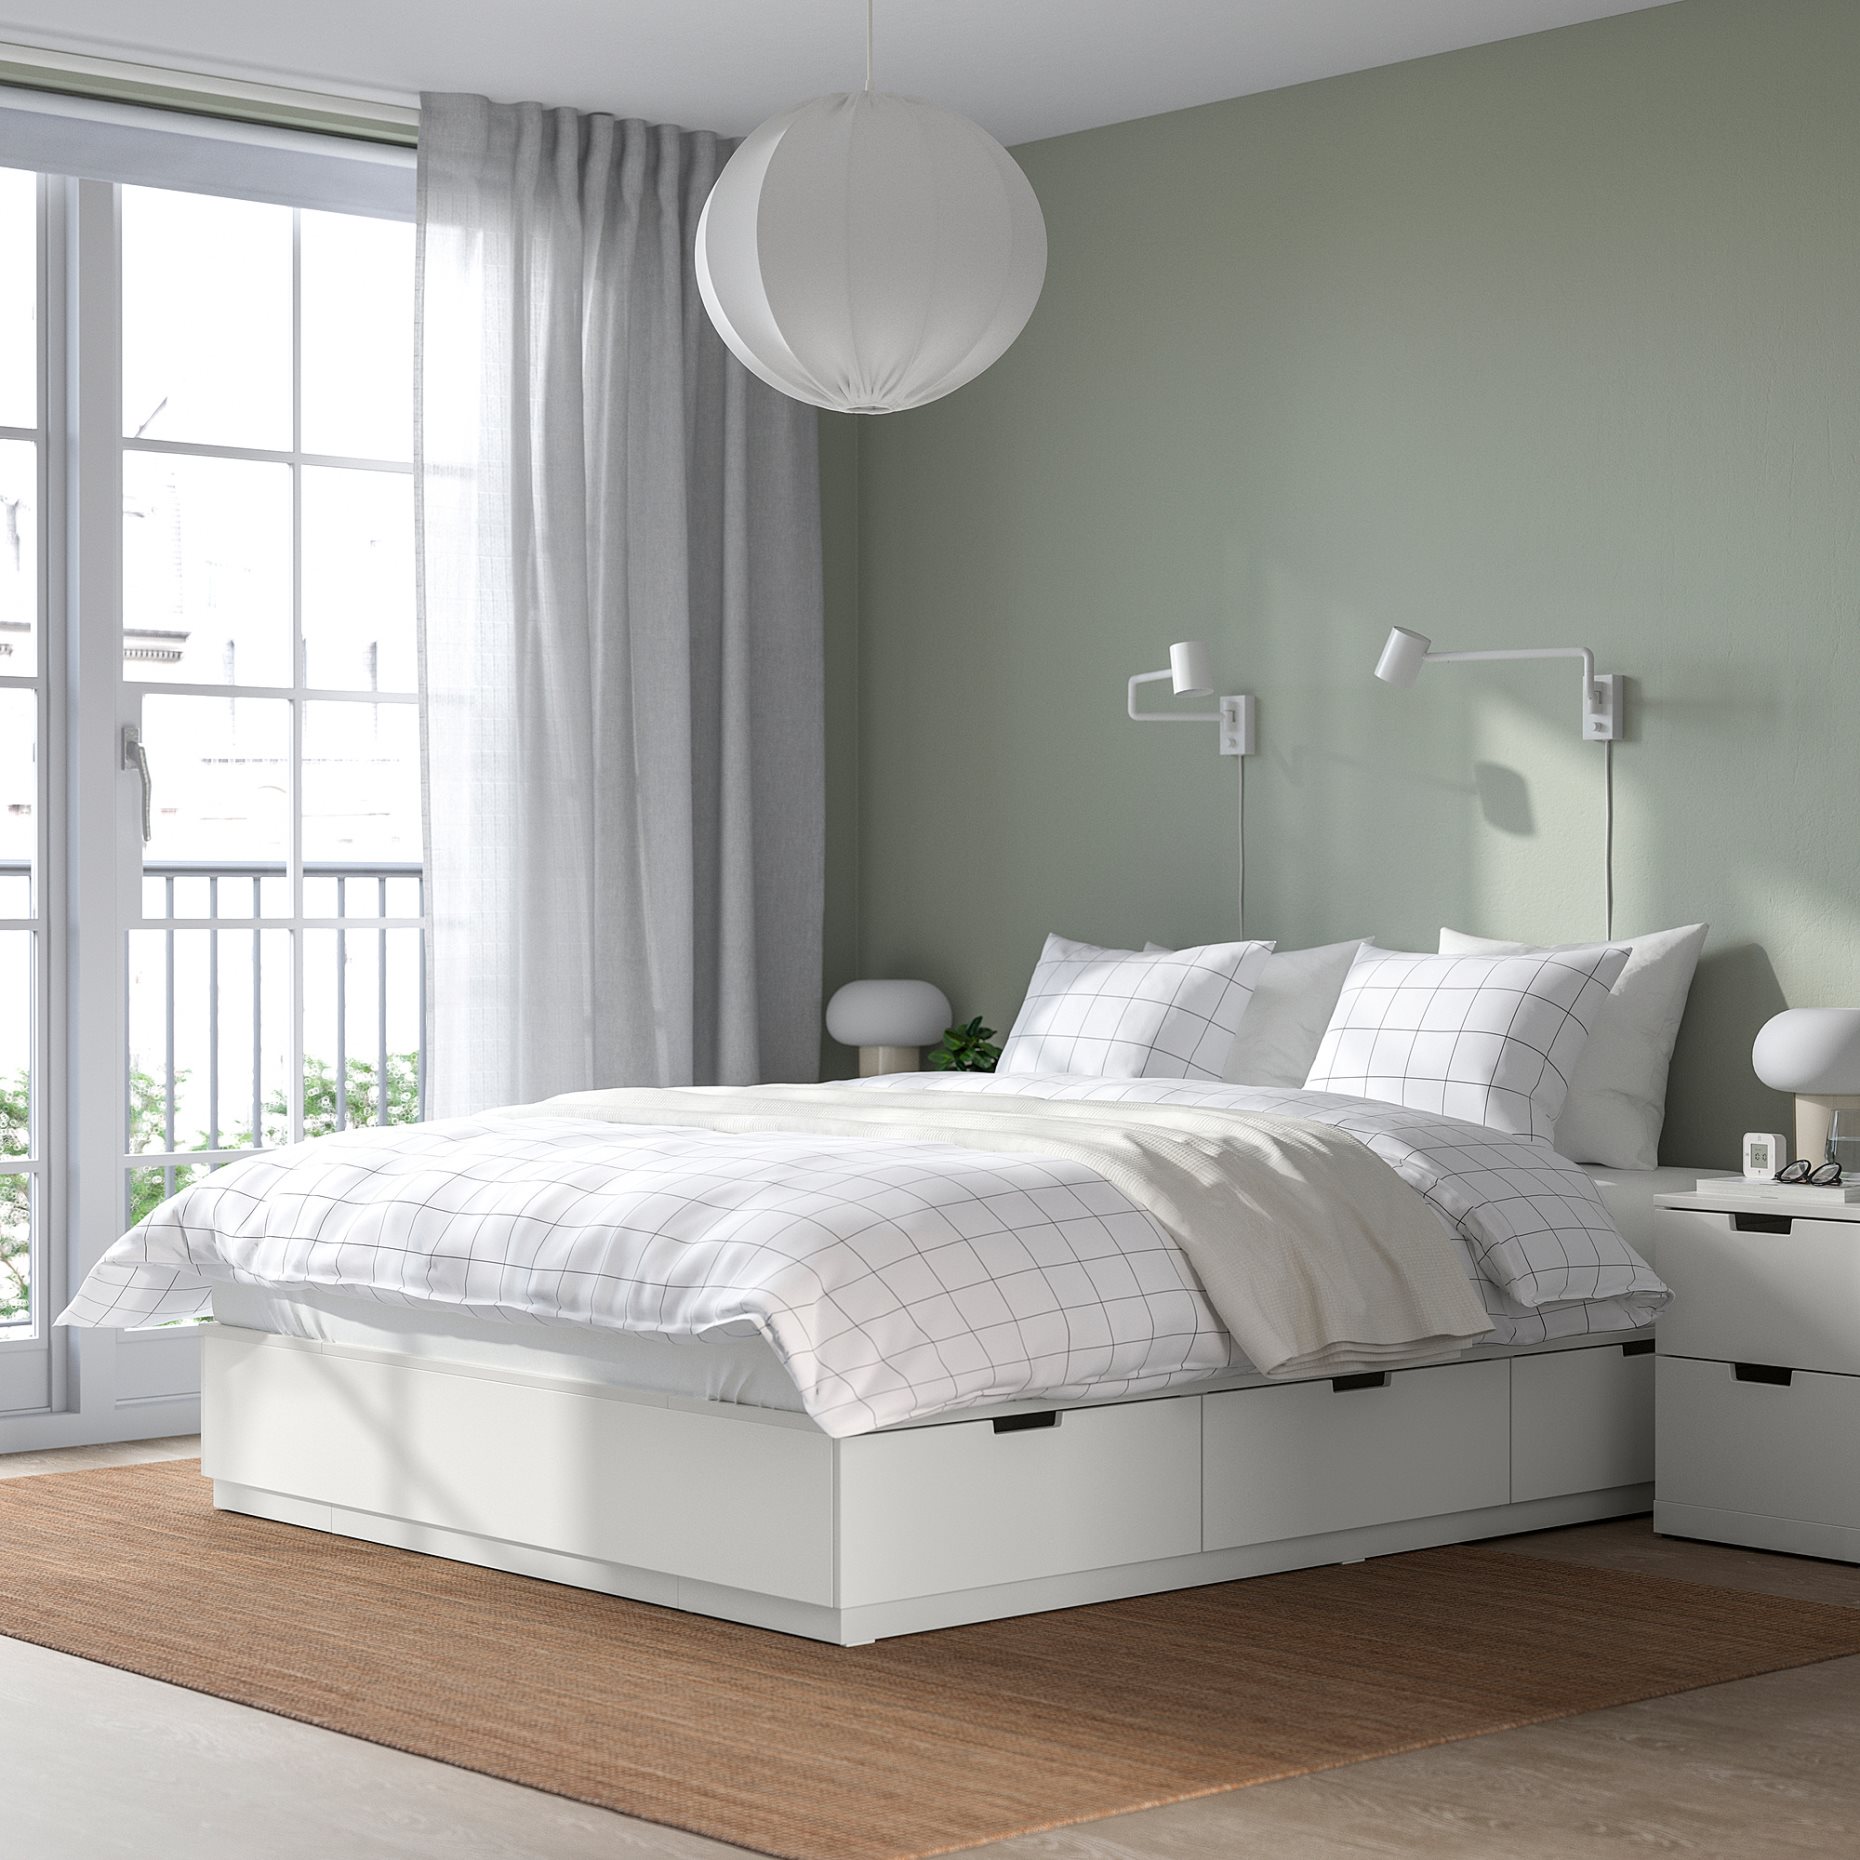 NORDLI, κρεβάτι με αποθηκευτικό χώρο, 160x200 cm, 003.498.49